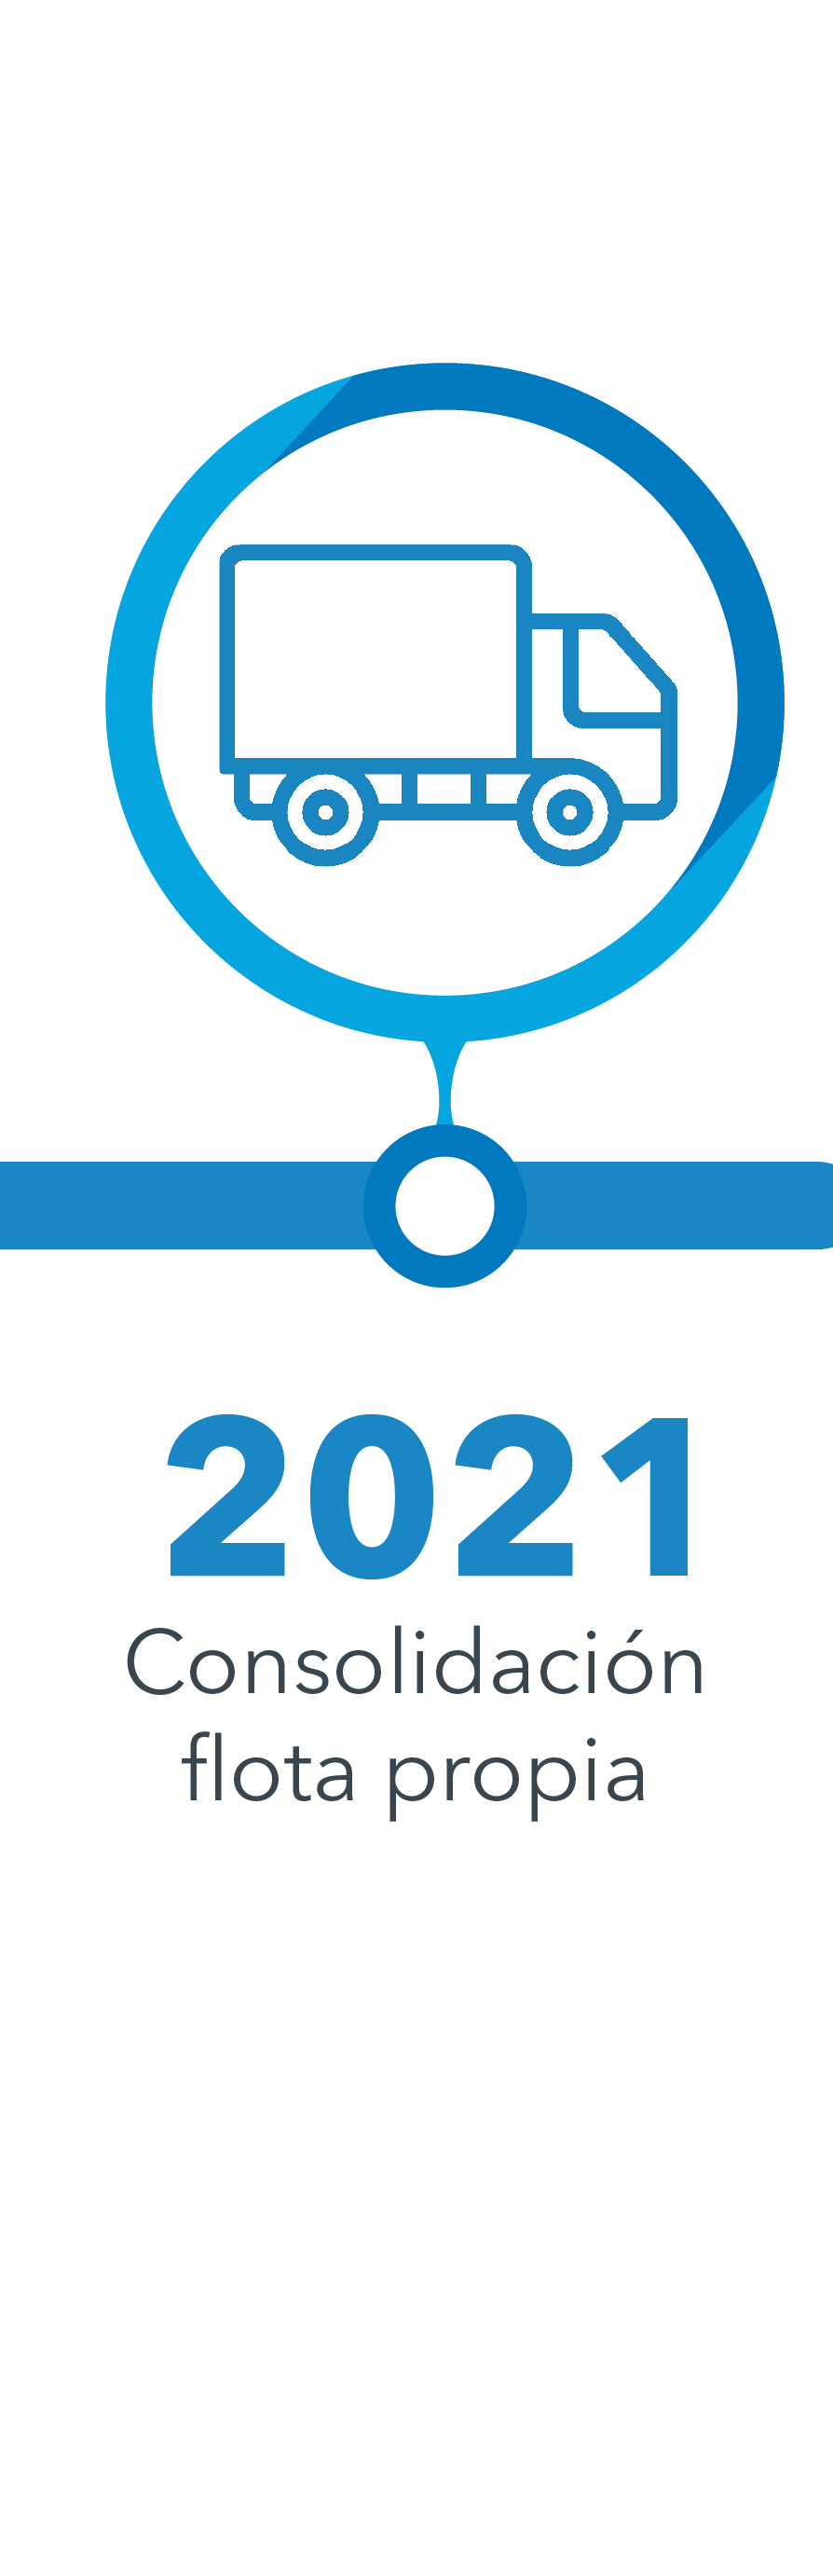 Año 2021 - Consolidacion flota propia